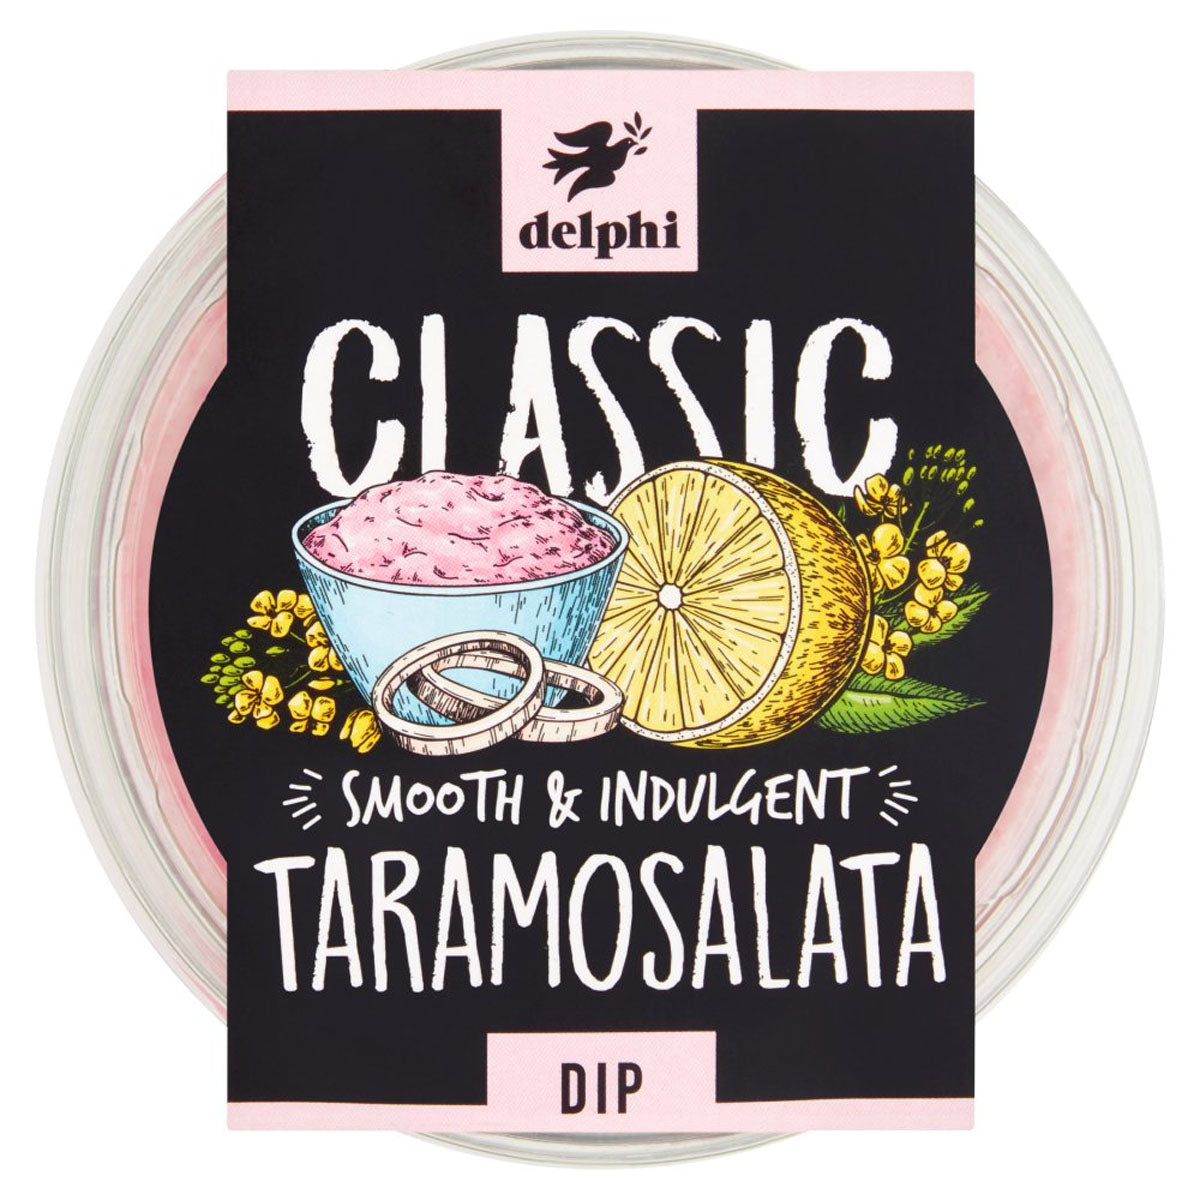 Delphi - Classic Smooth & Indulgent Taramosalata Dip - 170g - Continental Food Store